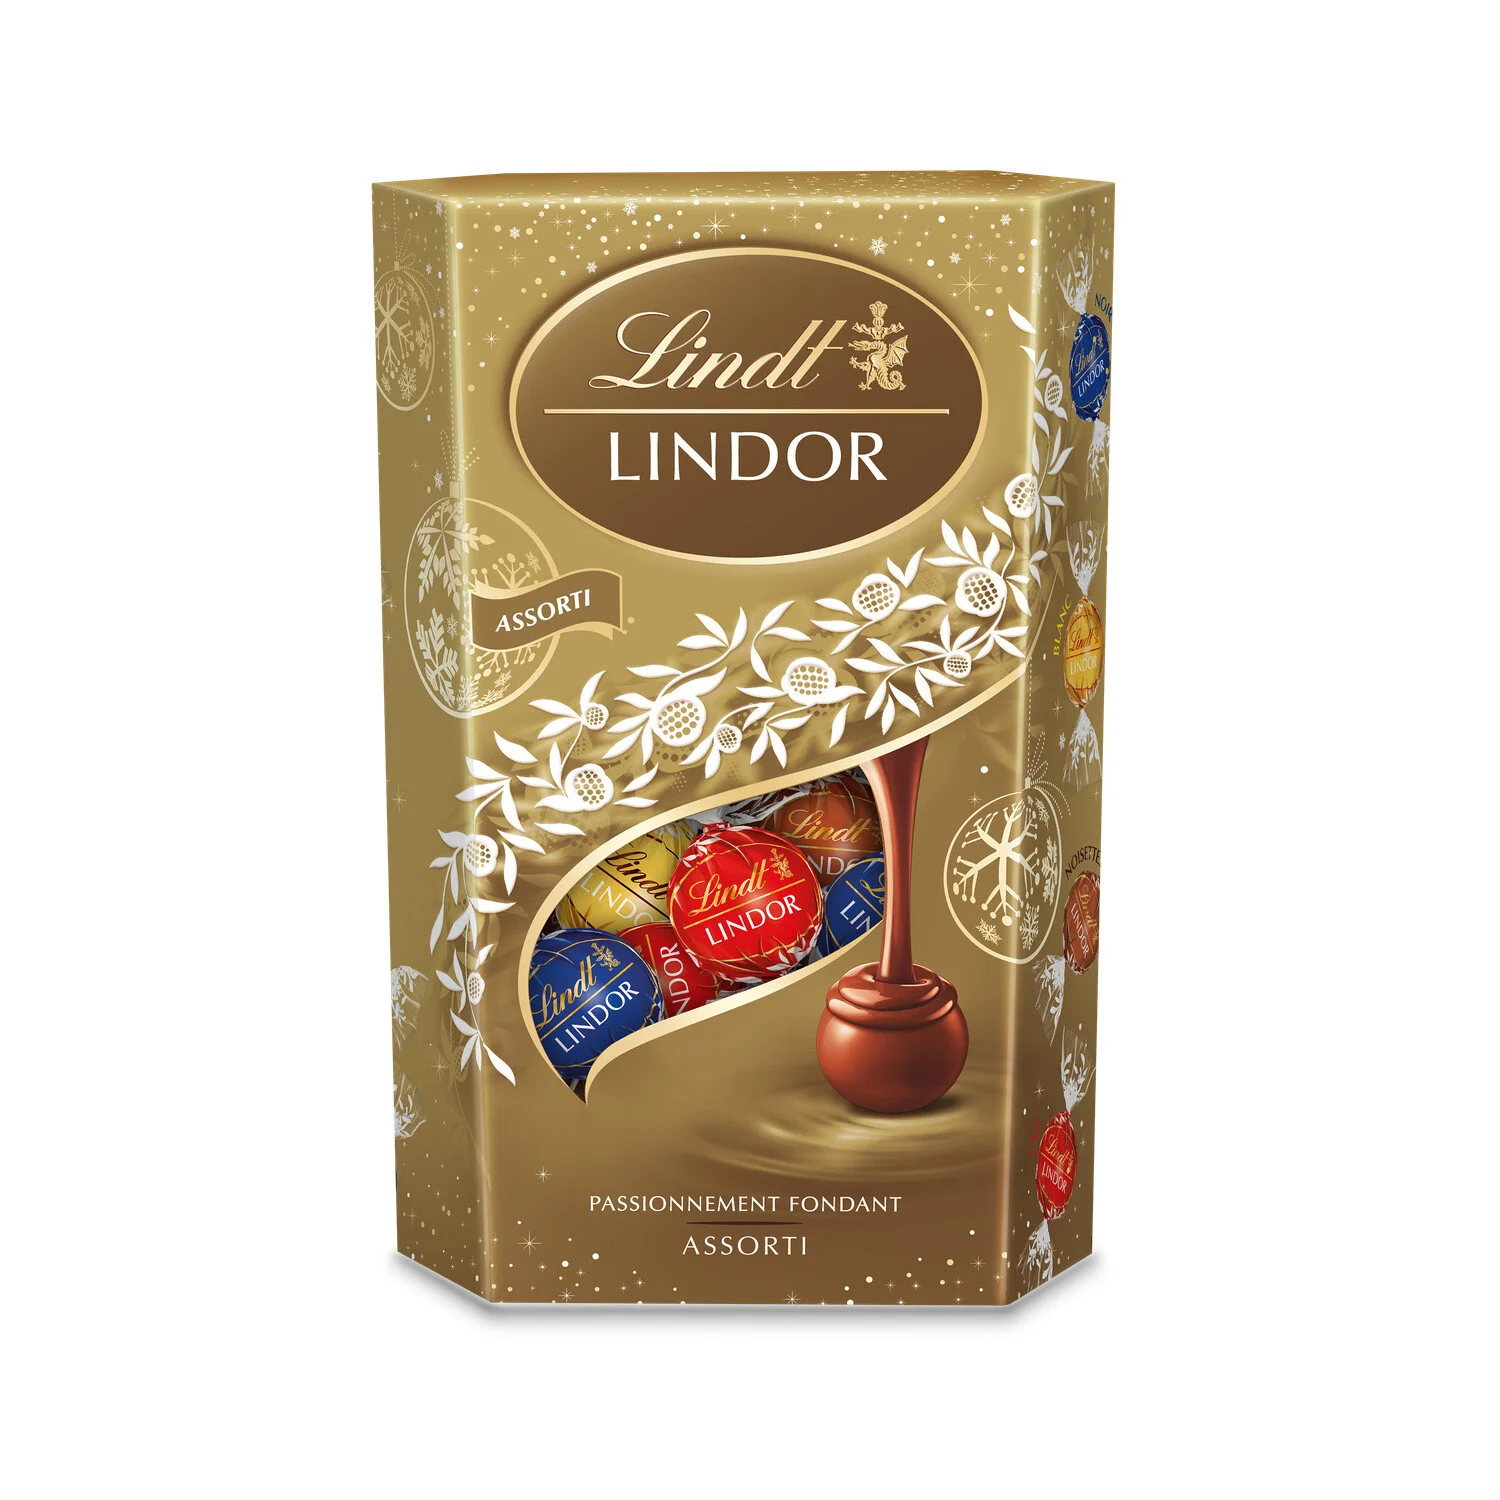 Lindor Cioccolato Assortito 200g - LINDT